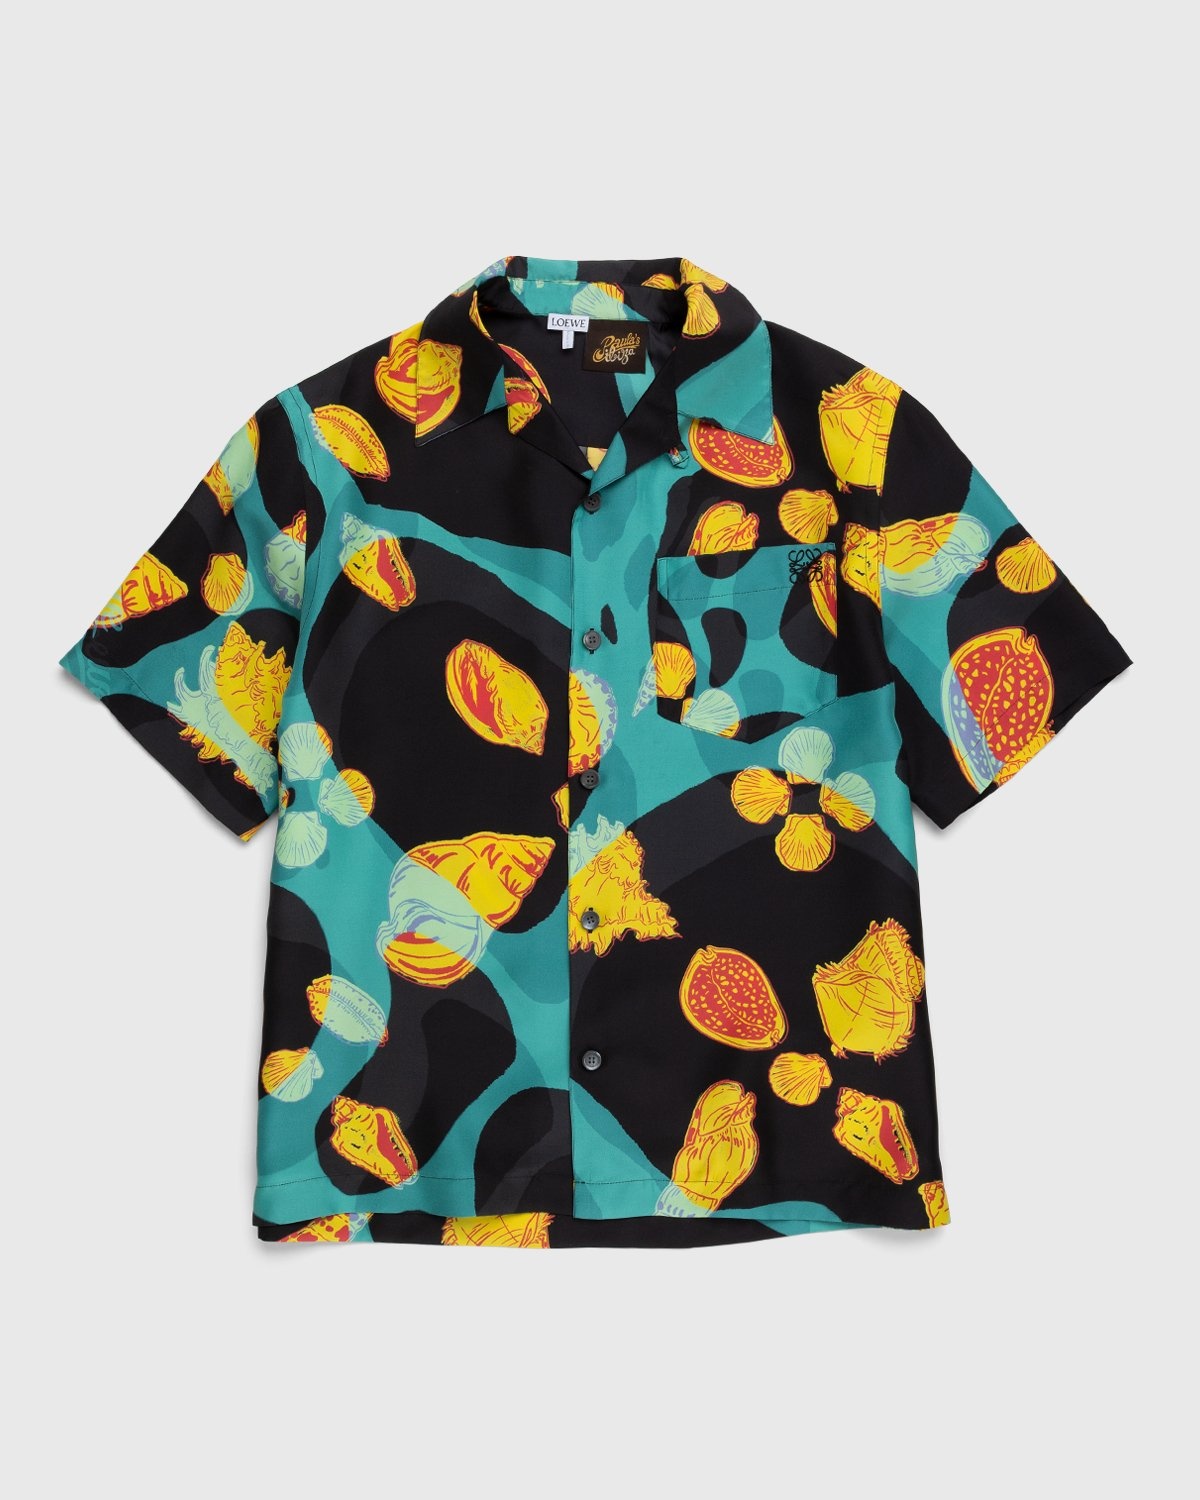 Loewe – Paula's Ibiza Shell Print Bowling Shirt Black - Shortsleeve Shirts - Multi - Image 1